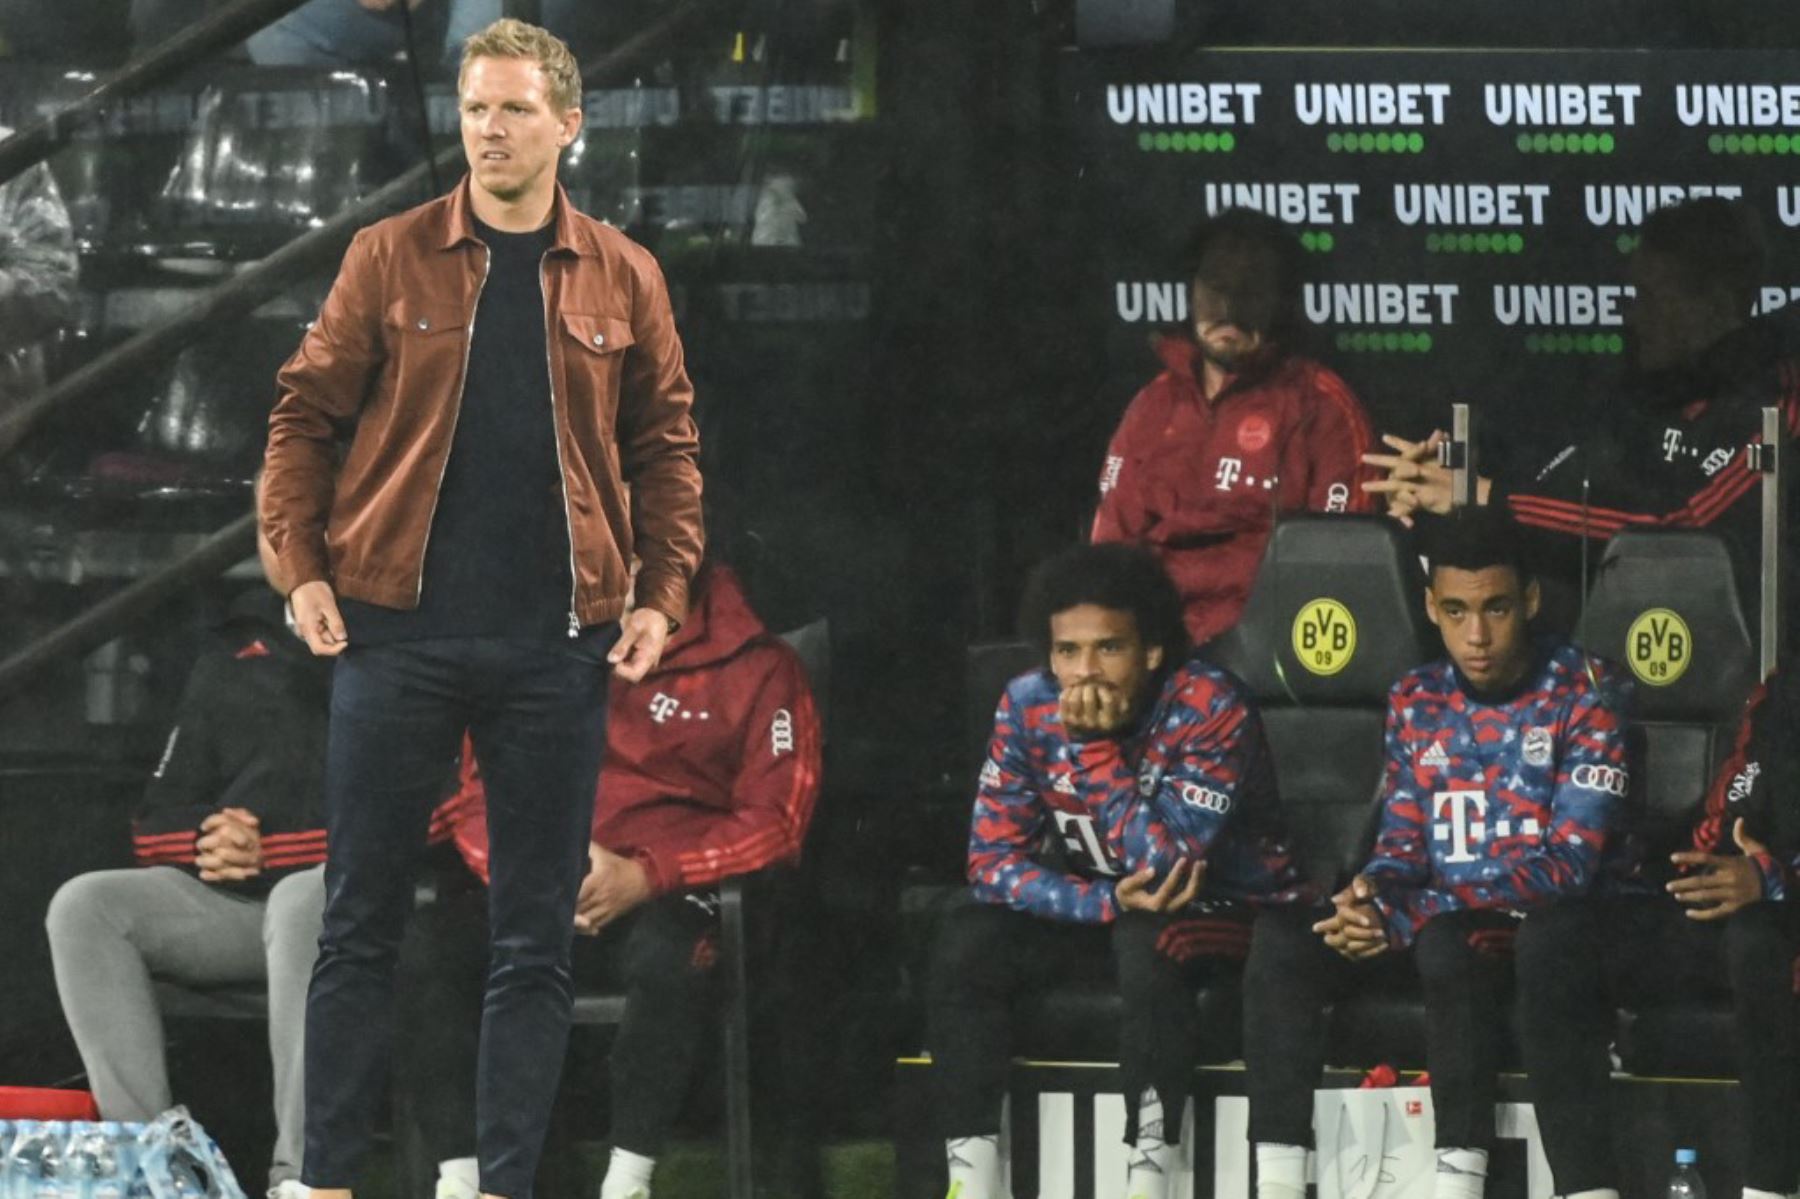 El entrenador del Bayern de Múnich, Julian Nagelsmann, observa durante el partido de fútbol de la Supercopa de Alemania BVB Borussia Dortmund vs FC Bayern Múnich en Dortmund

Foto: AFP